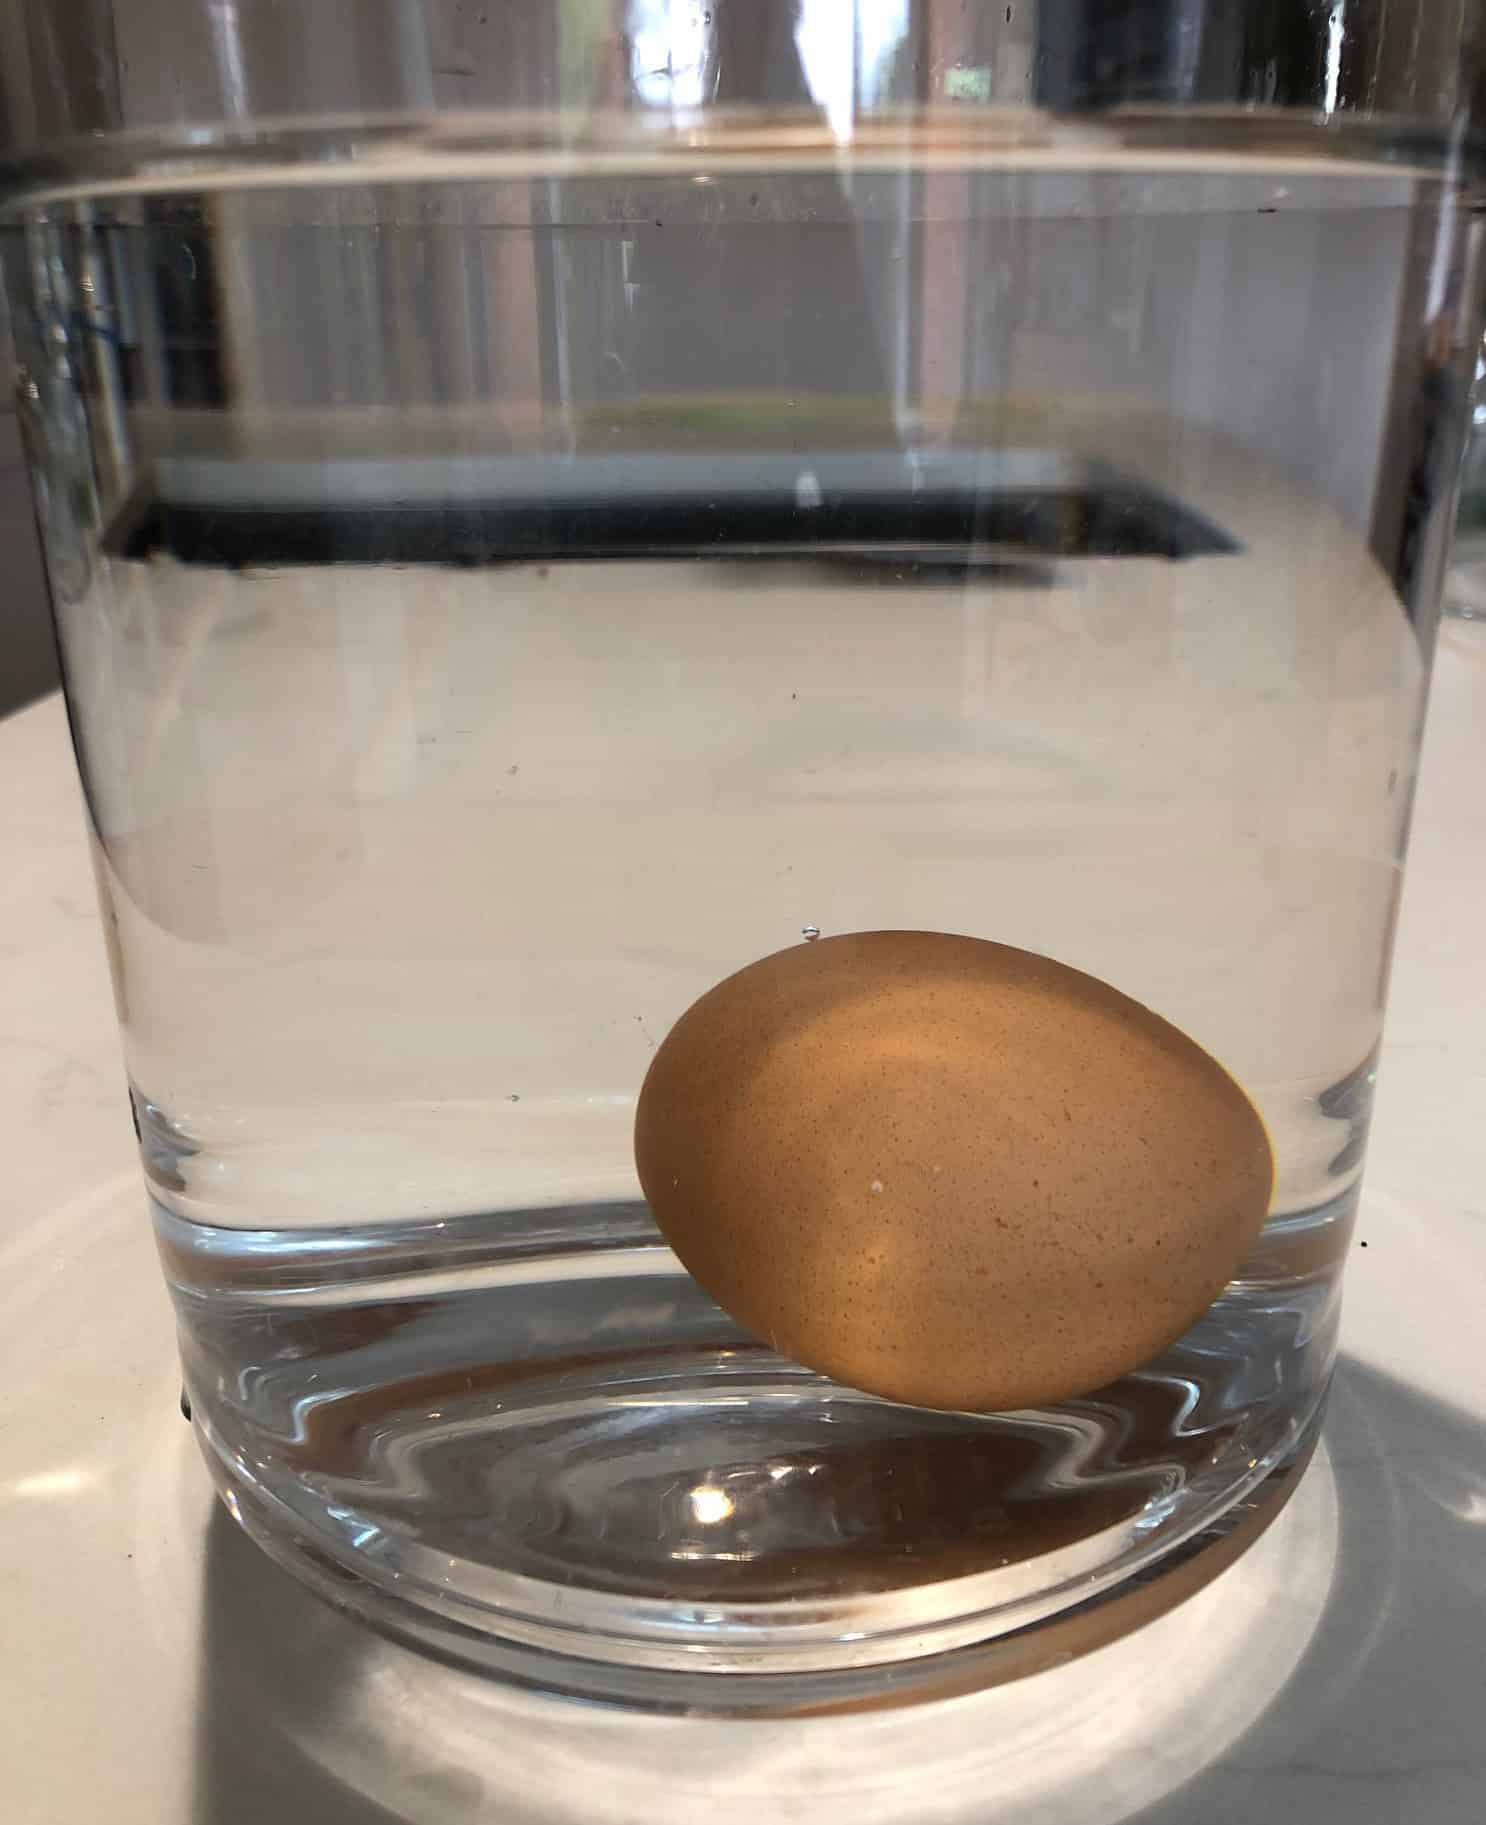 Egg lying on side in glass